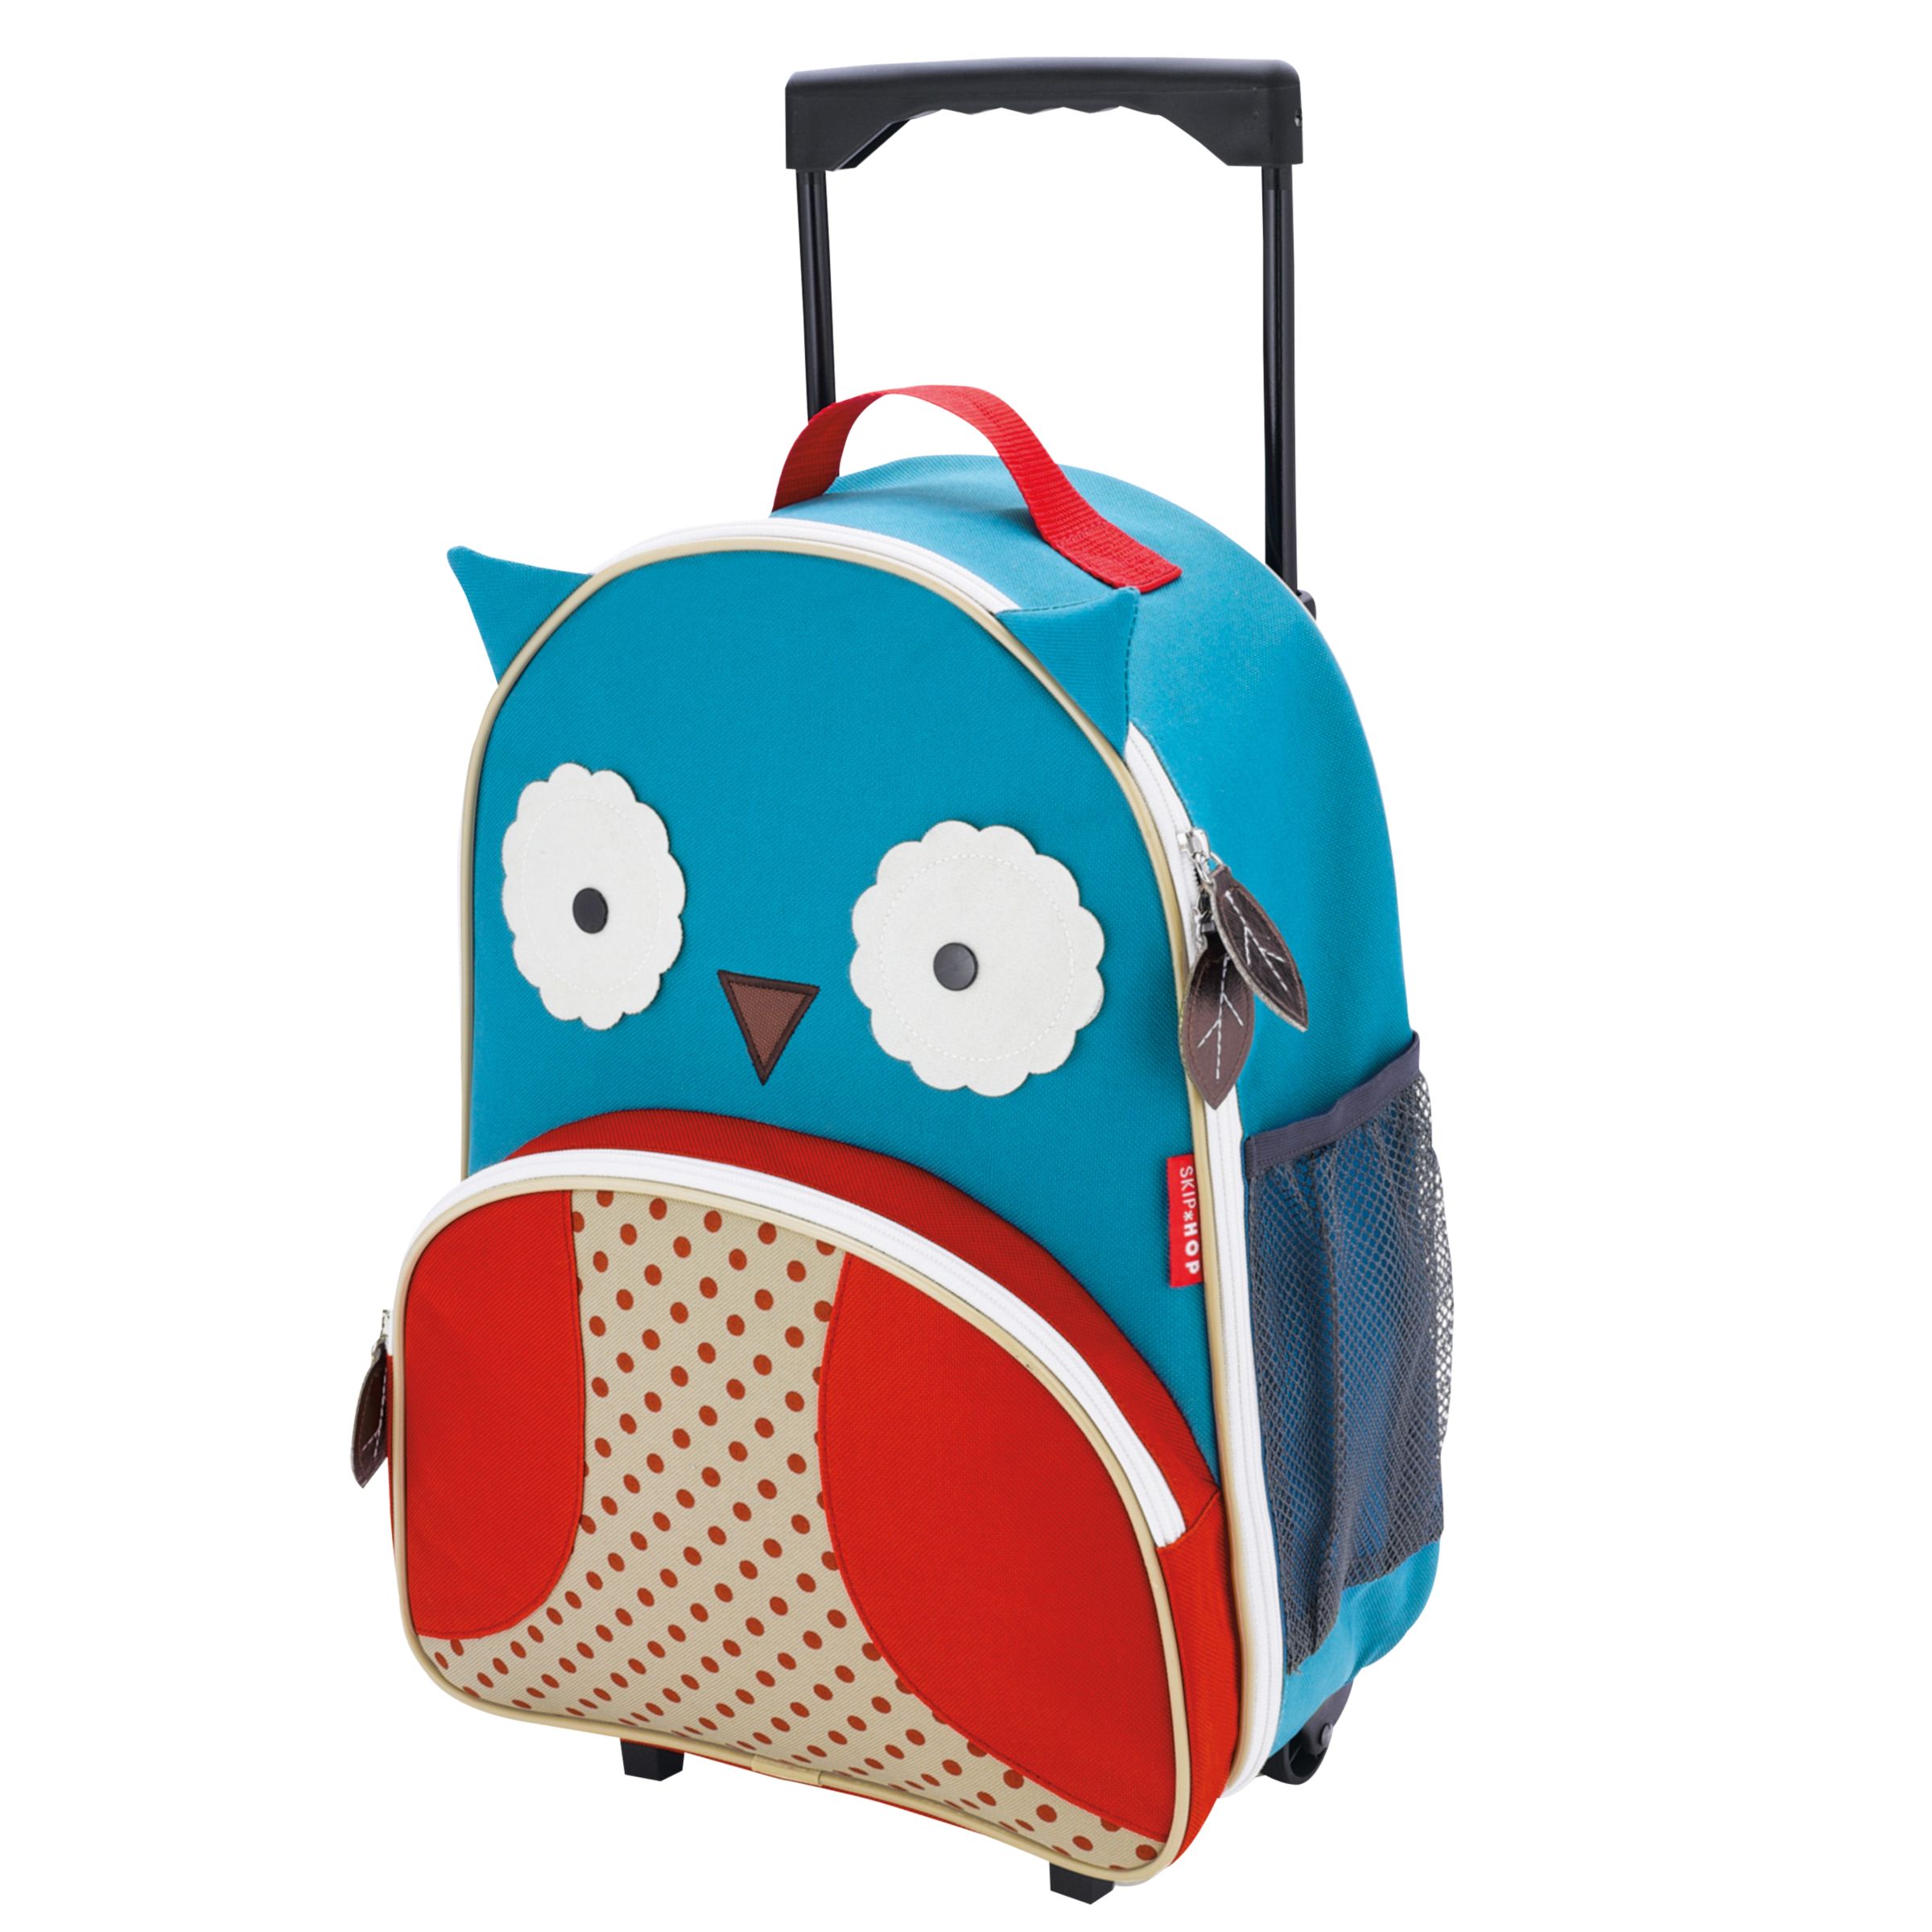 Skip Hop Zoo Owl Luggage Bag